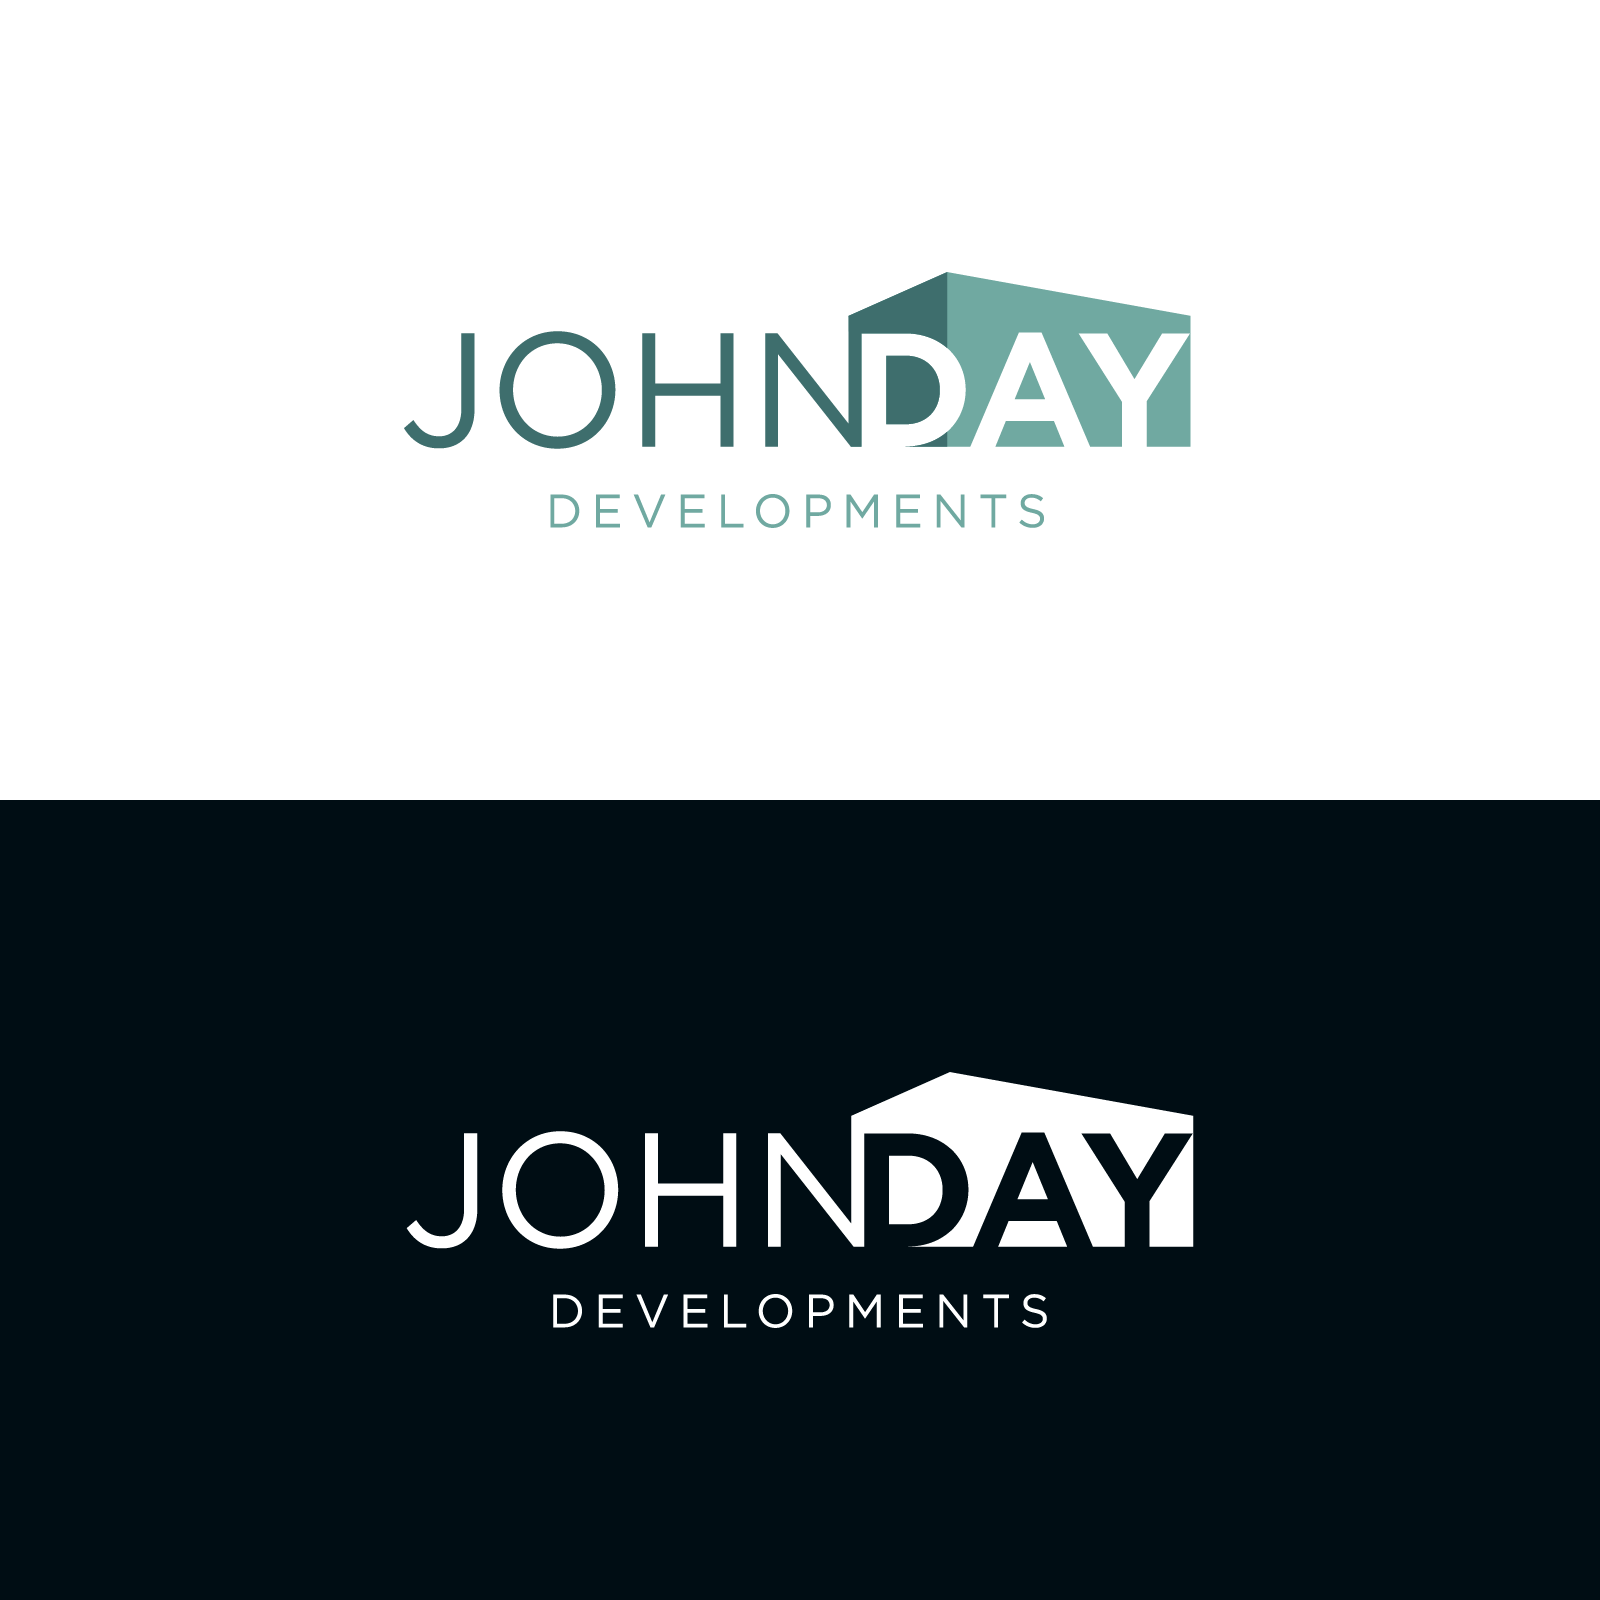 Alternate John Day Developments logo redesign option